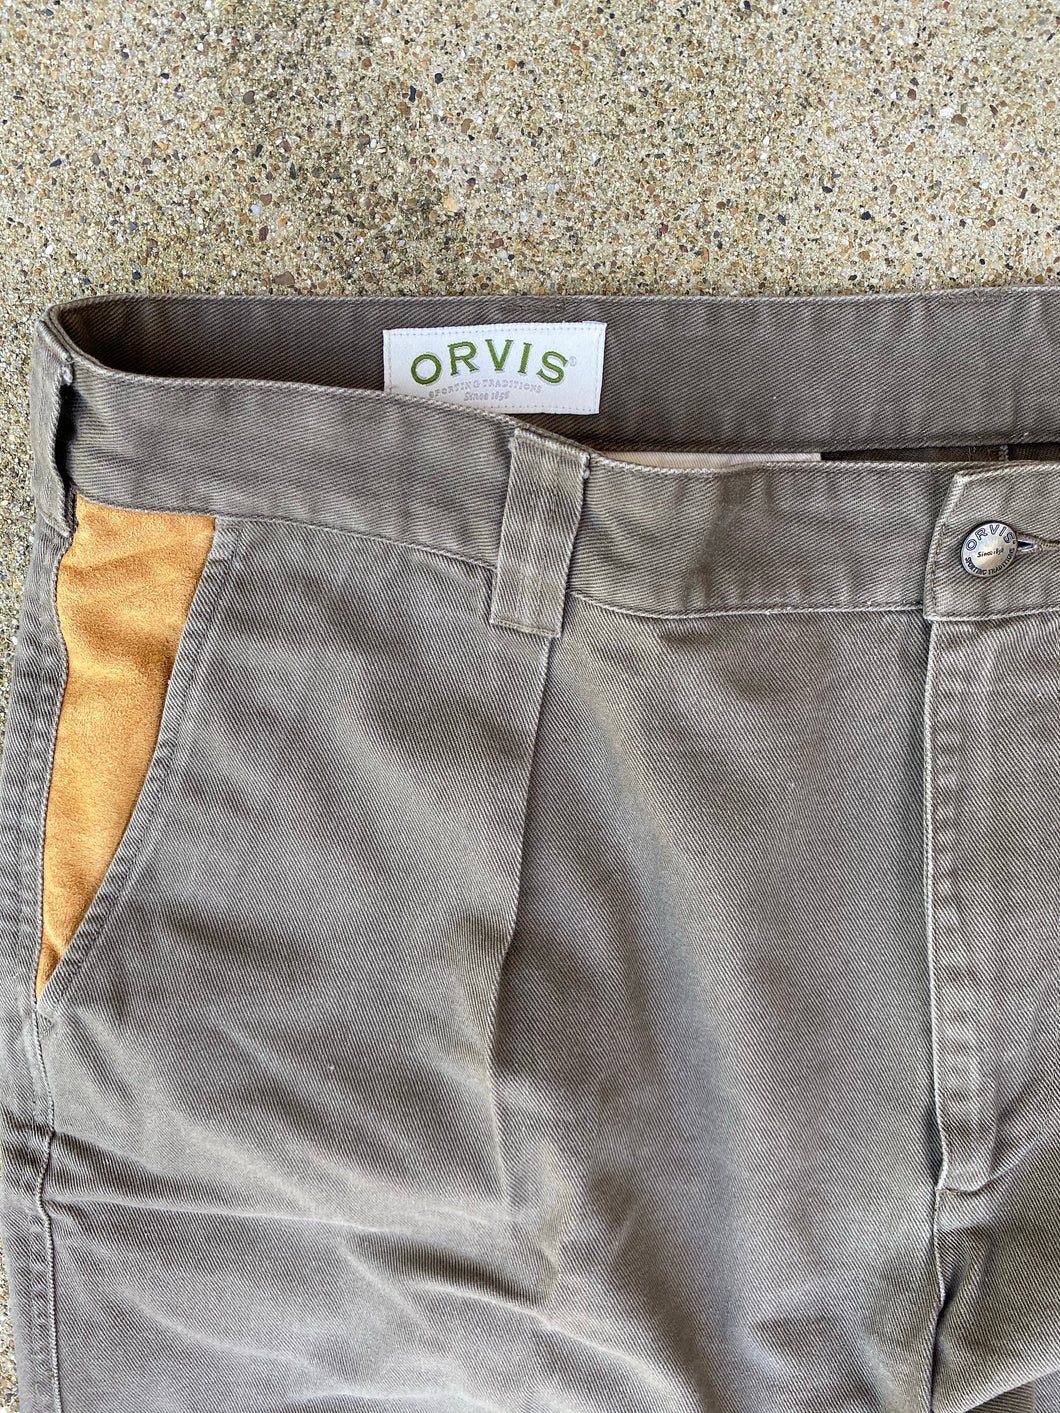 Orvis Pants (42x33)